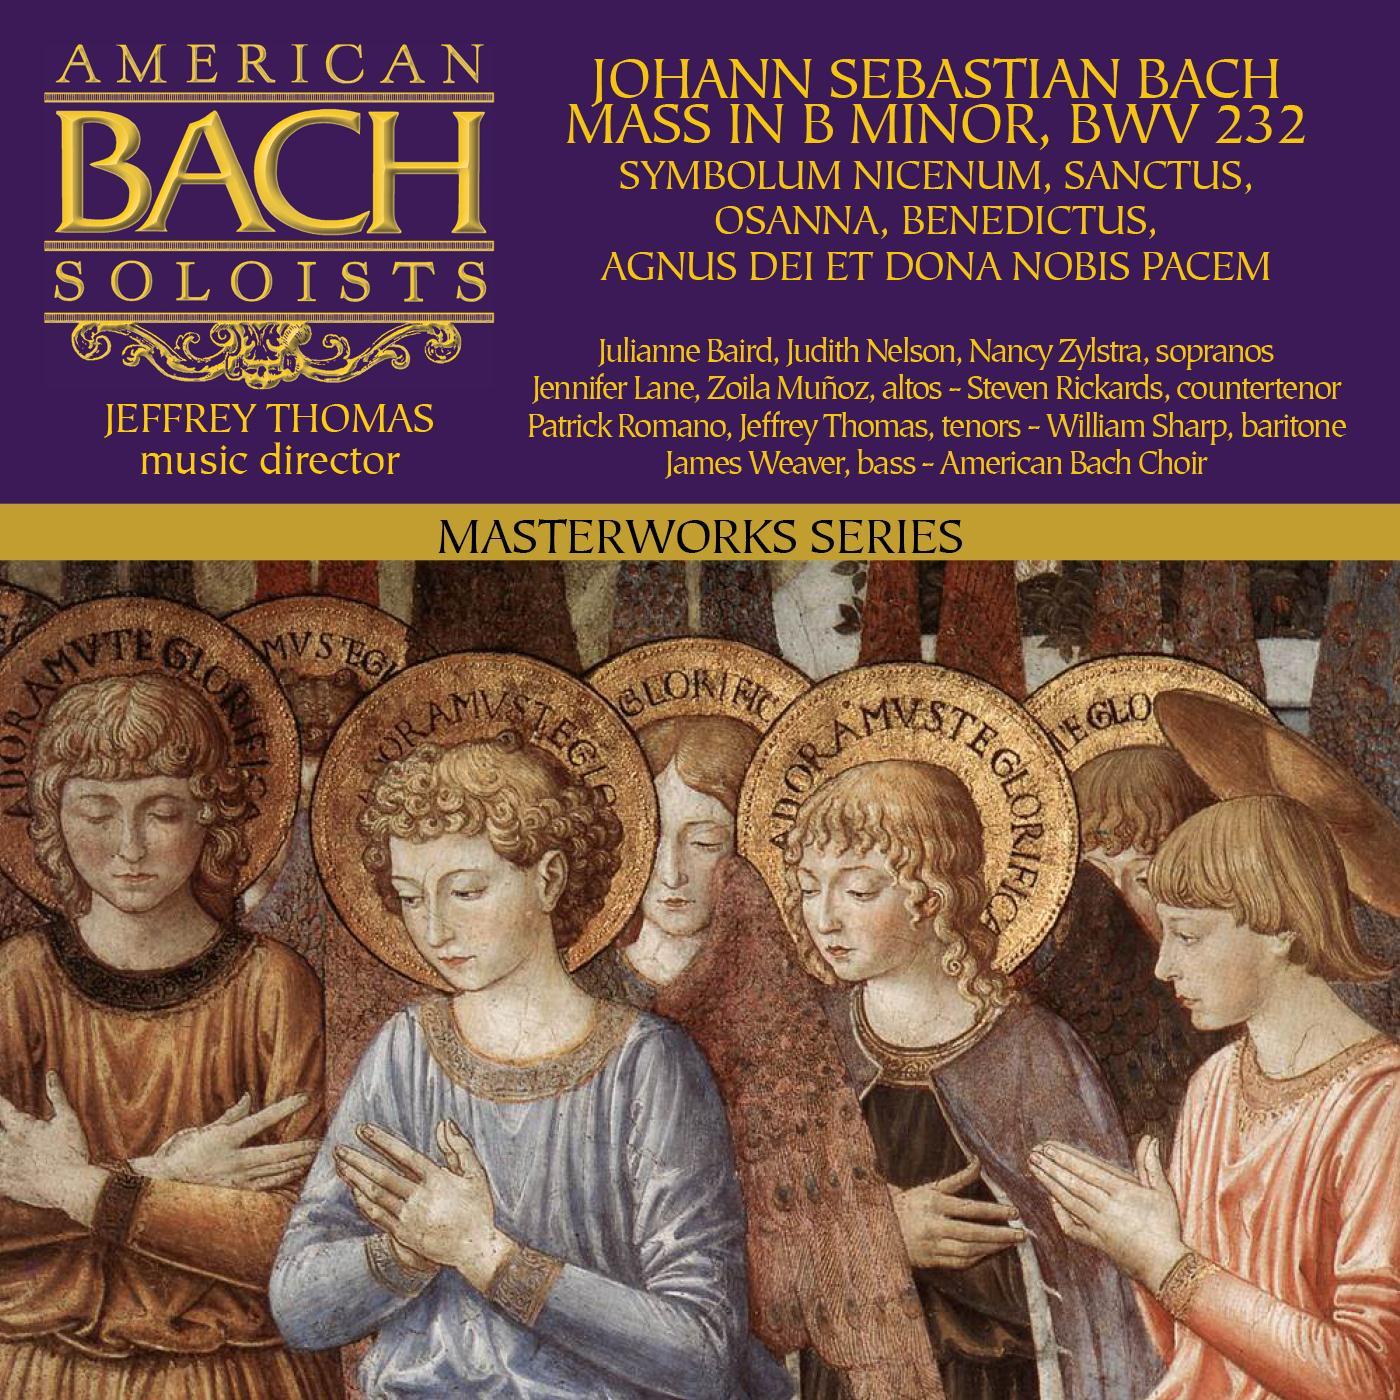 Mass in B Minor, BWV 232 Chorus: Et resurrexit